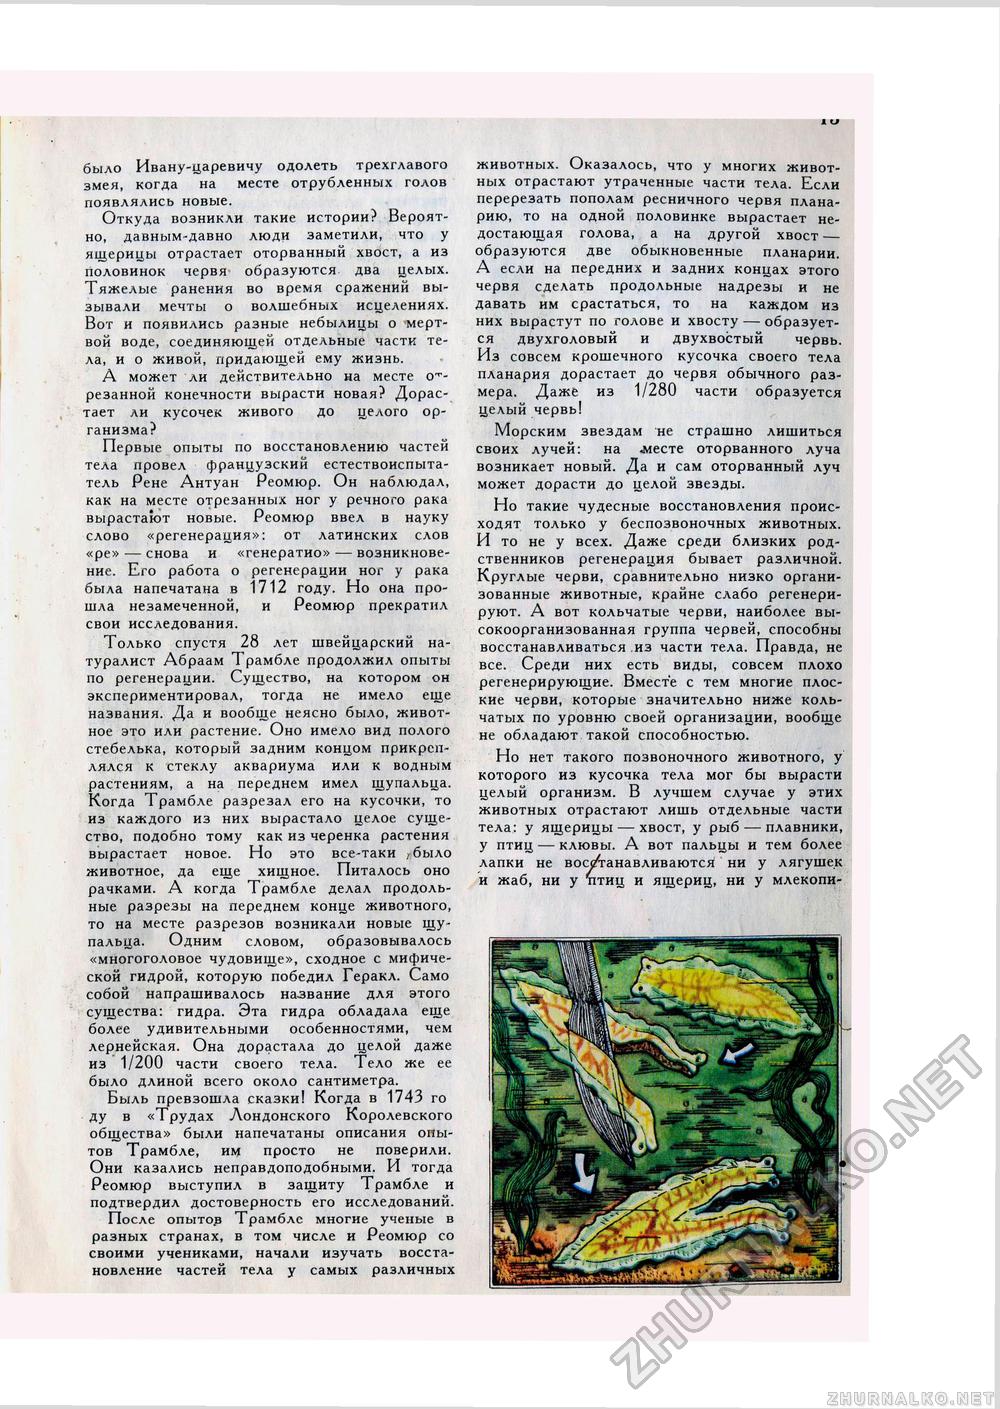 Юный Натуралист 1976-12, страница 15